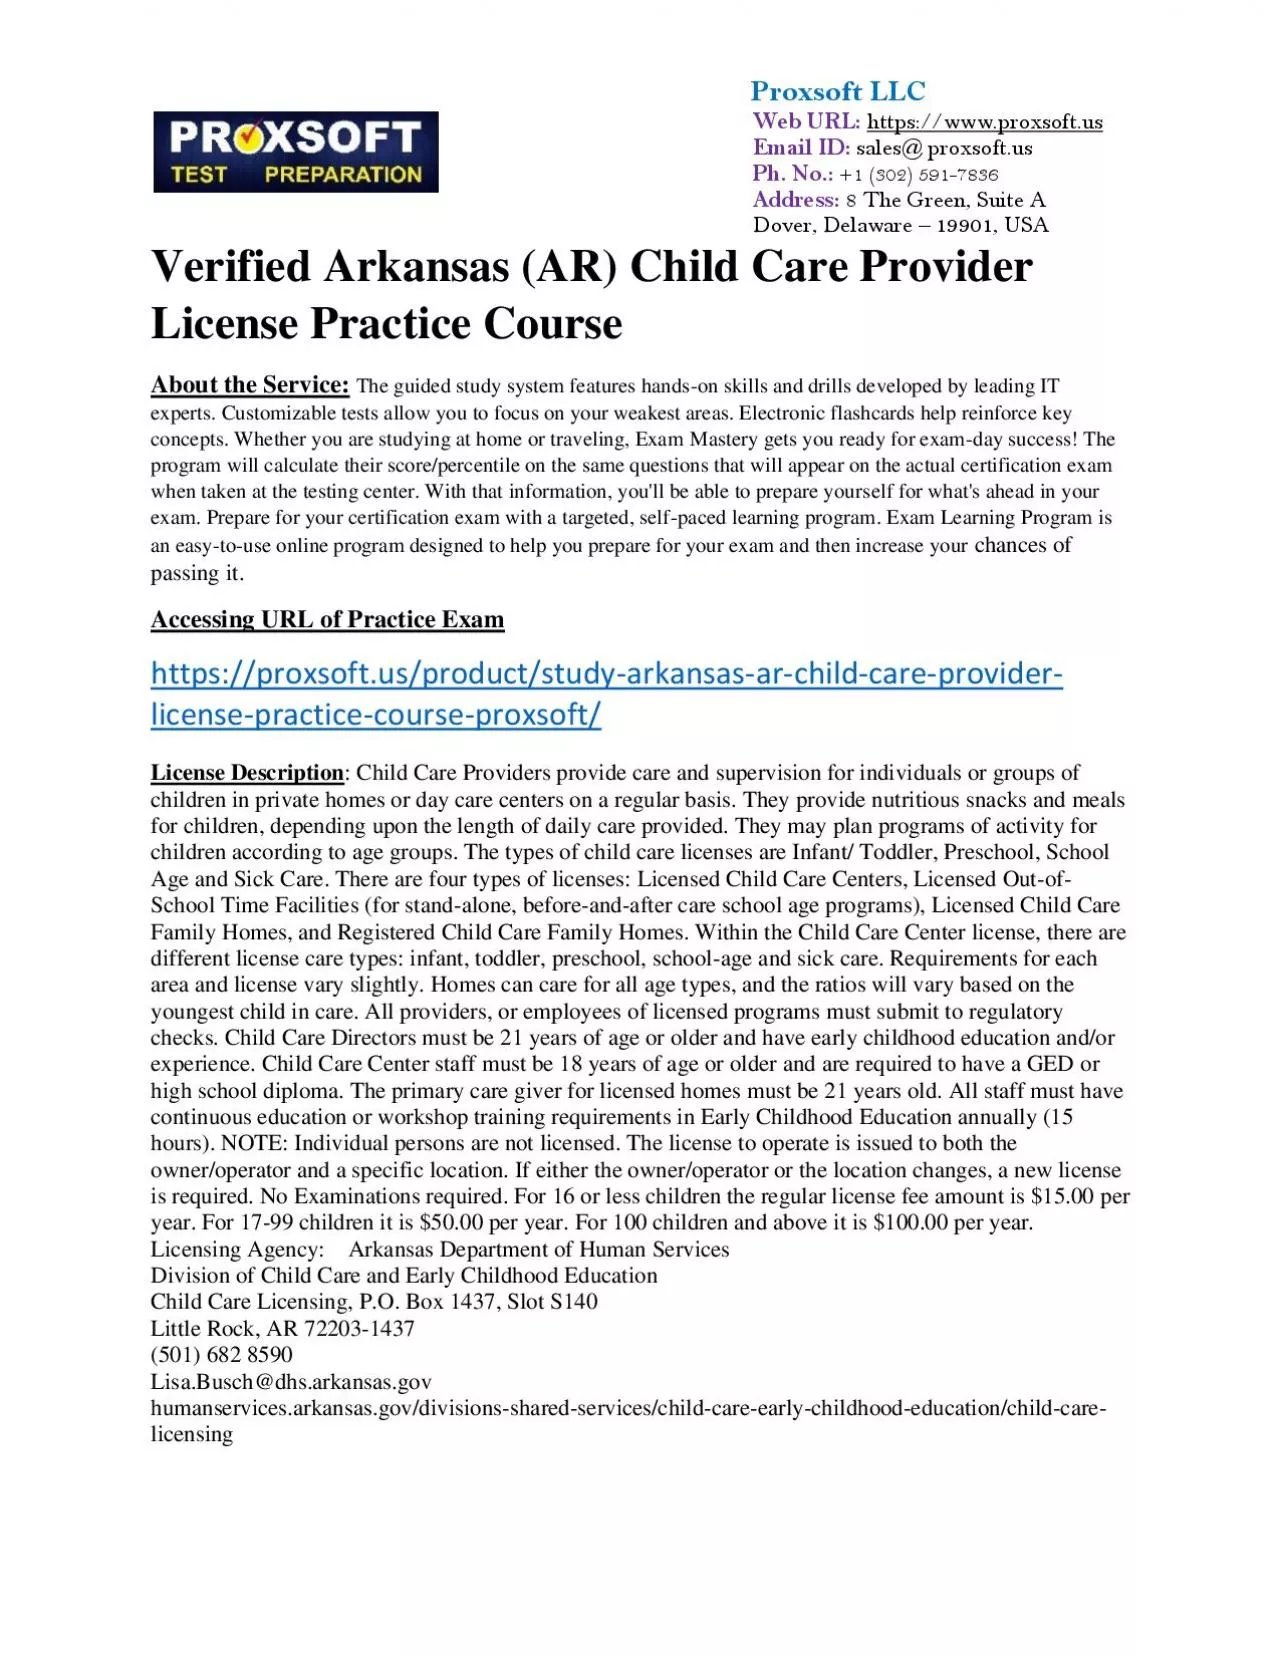 Verified Arkansas (AR) Certified Public Accountant License Practice Course